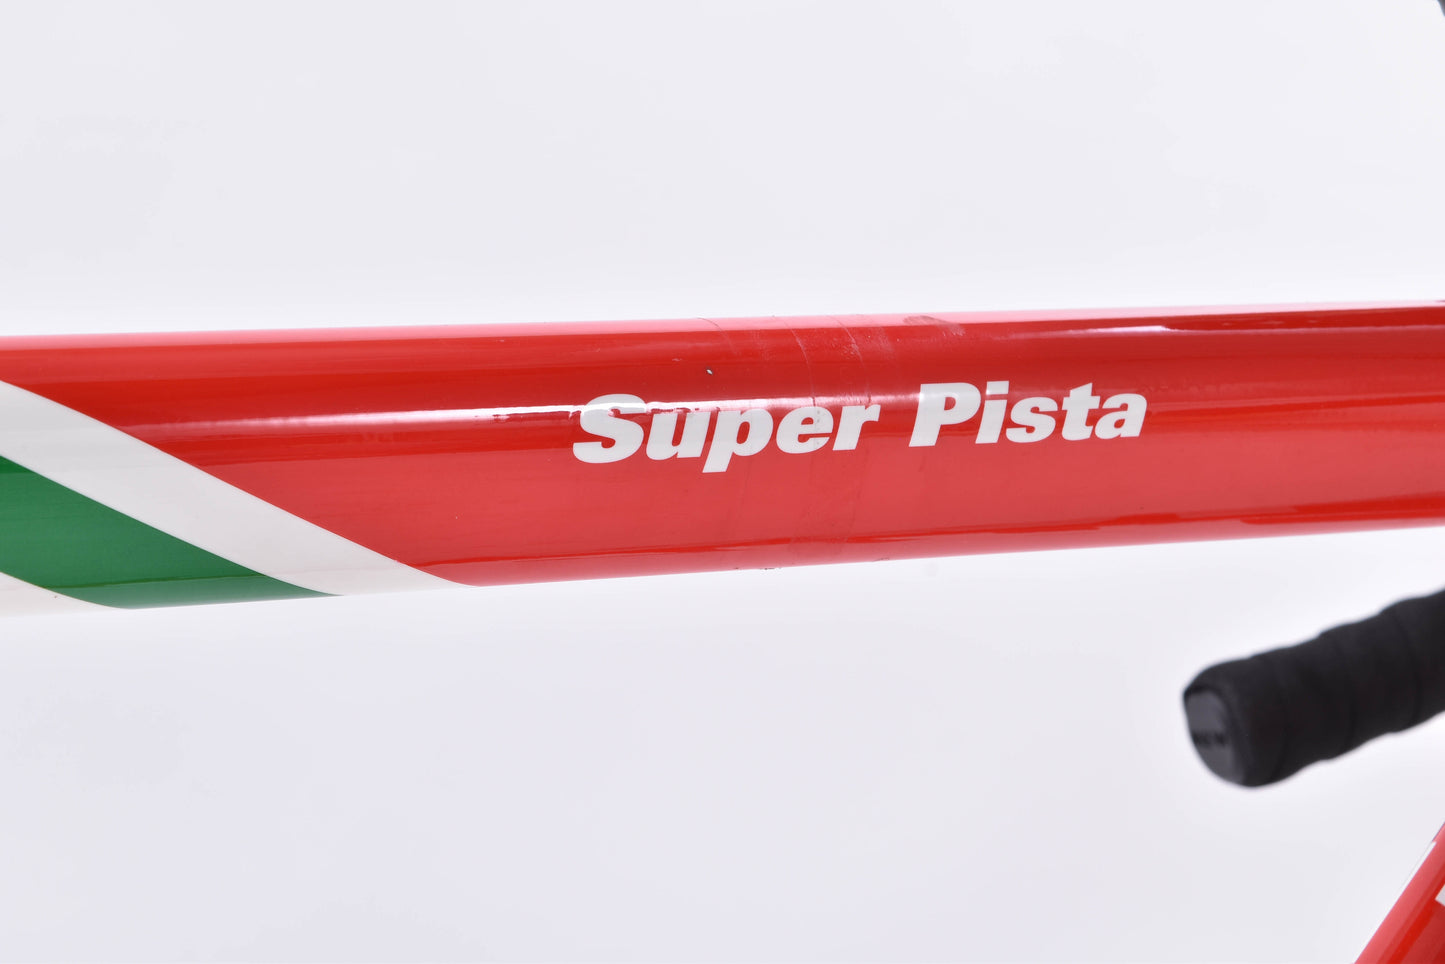 USED Bianchi Super Pista 55cm Track Bike White/Red/Green